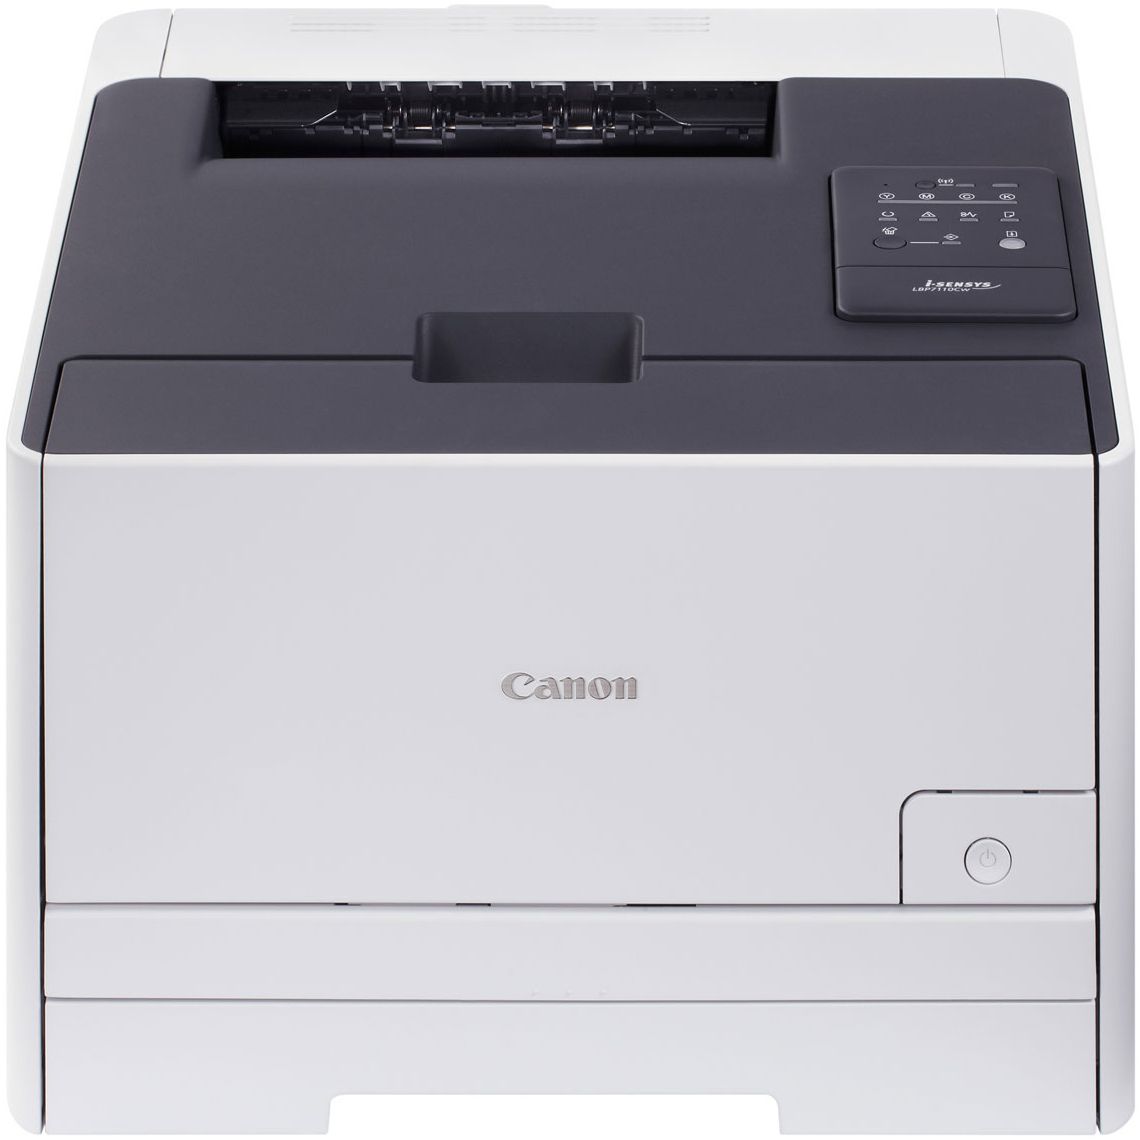  Imprimanta laser color Canon LBP7110CW, Wireless, A4 